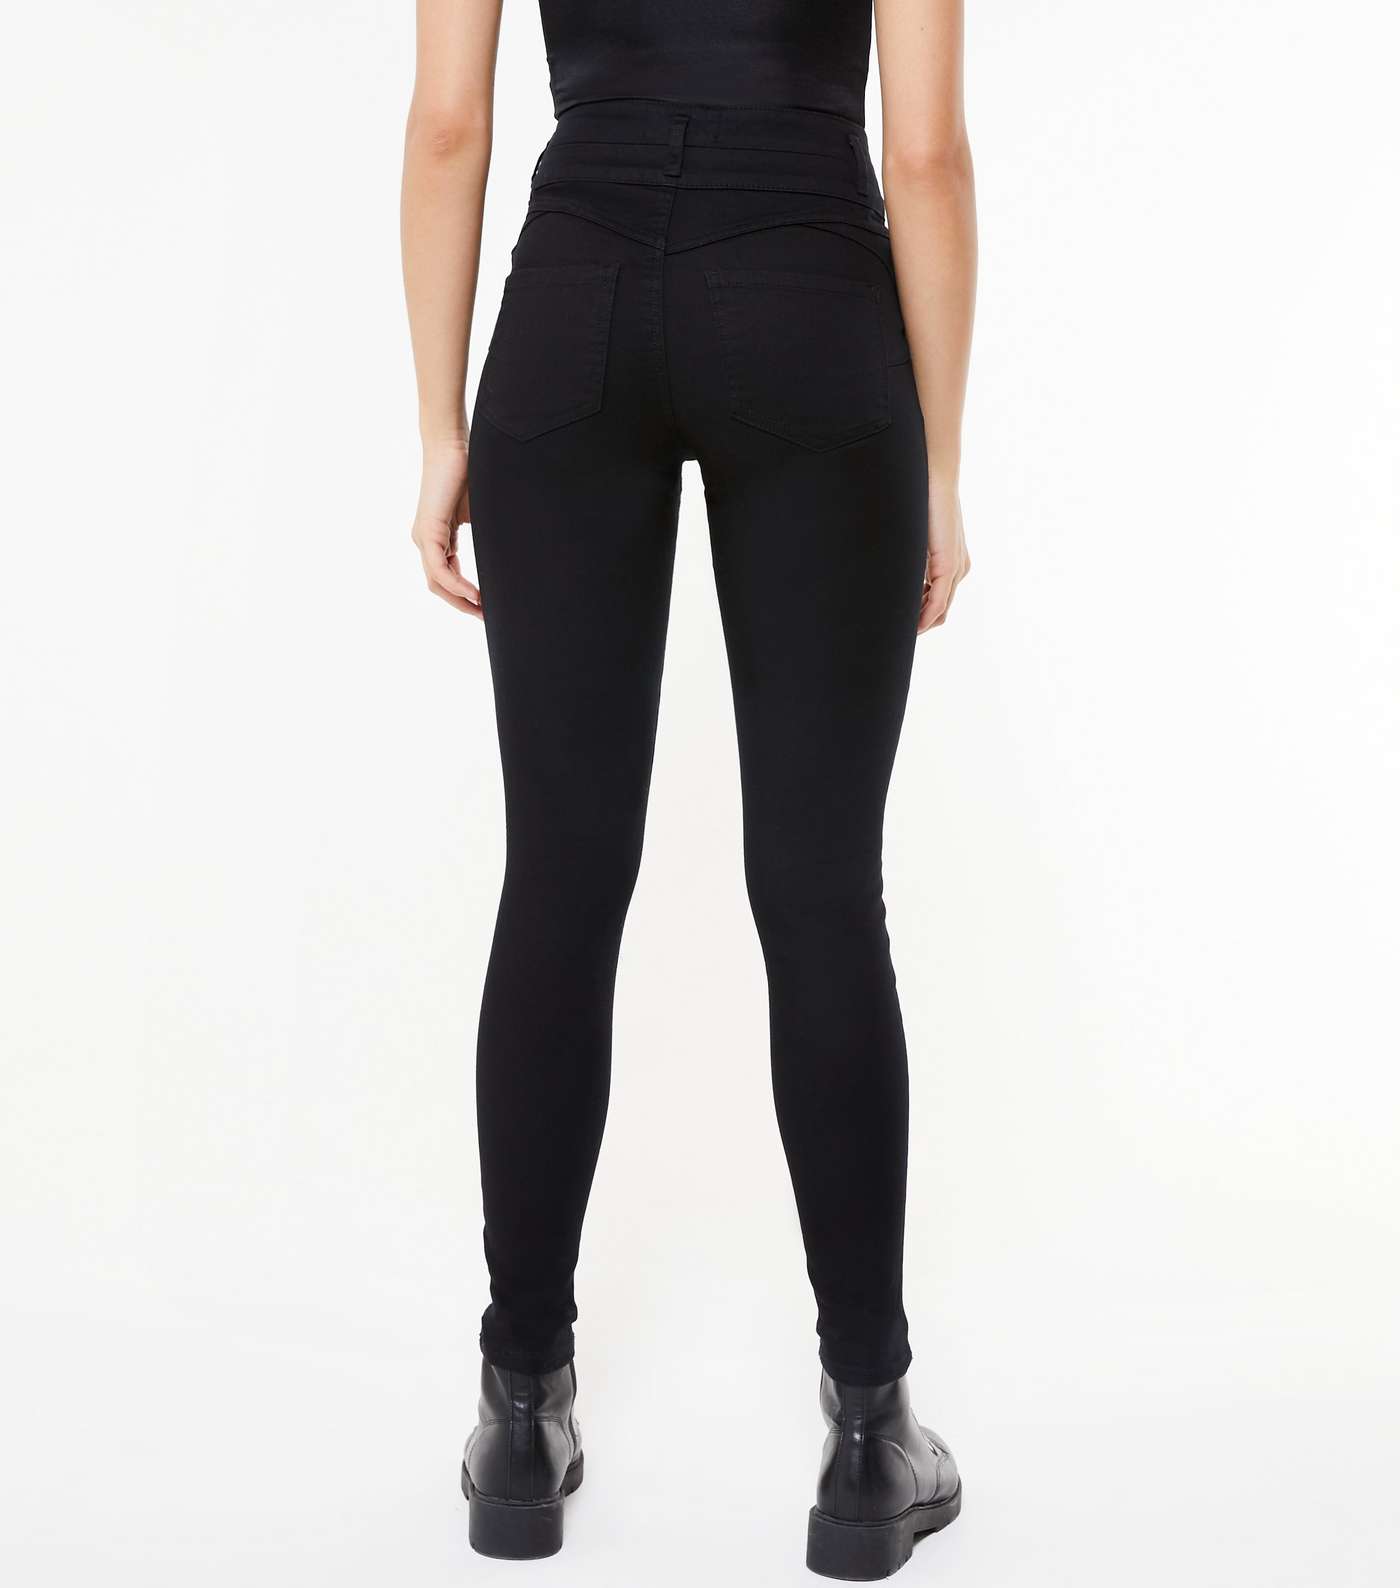 Black 'Lift & Shape' High Waist Yazmin Skinny Jeans Image 3